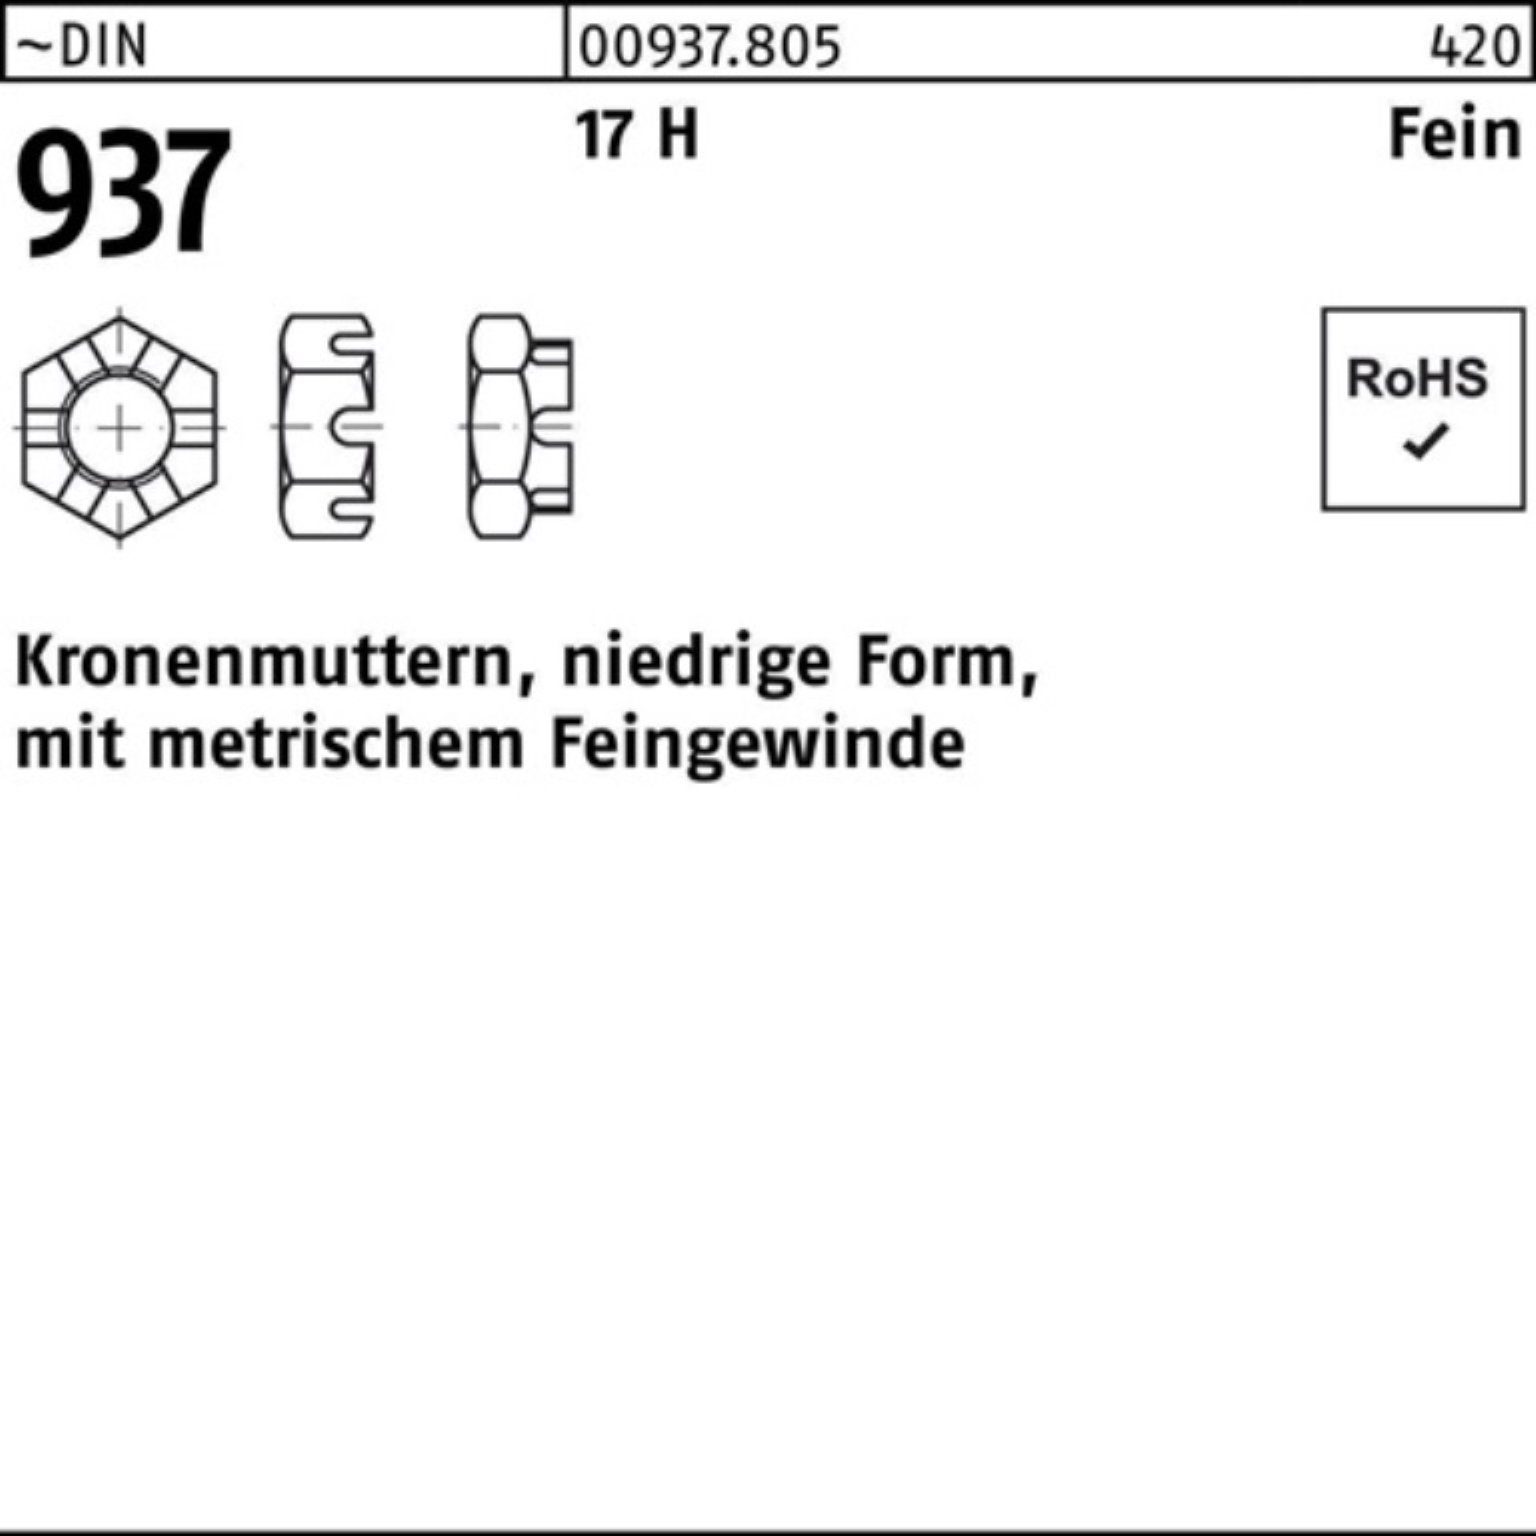 Reyher Kronenmutter 100er Pack Kronenmutter DIN 937 niedrige FormM36x 1,5 17 H Feingew. 1 | Muttern